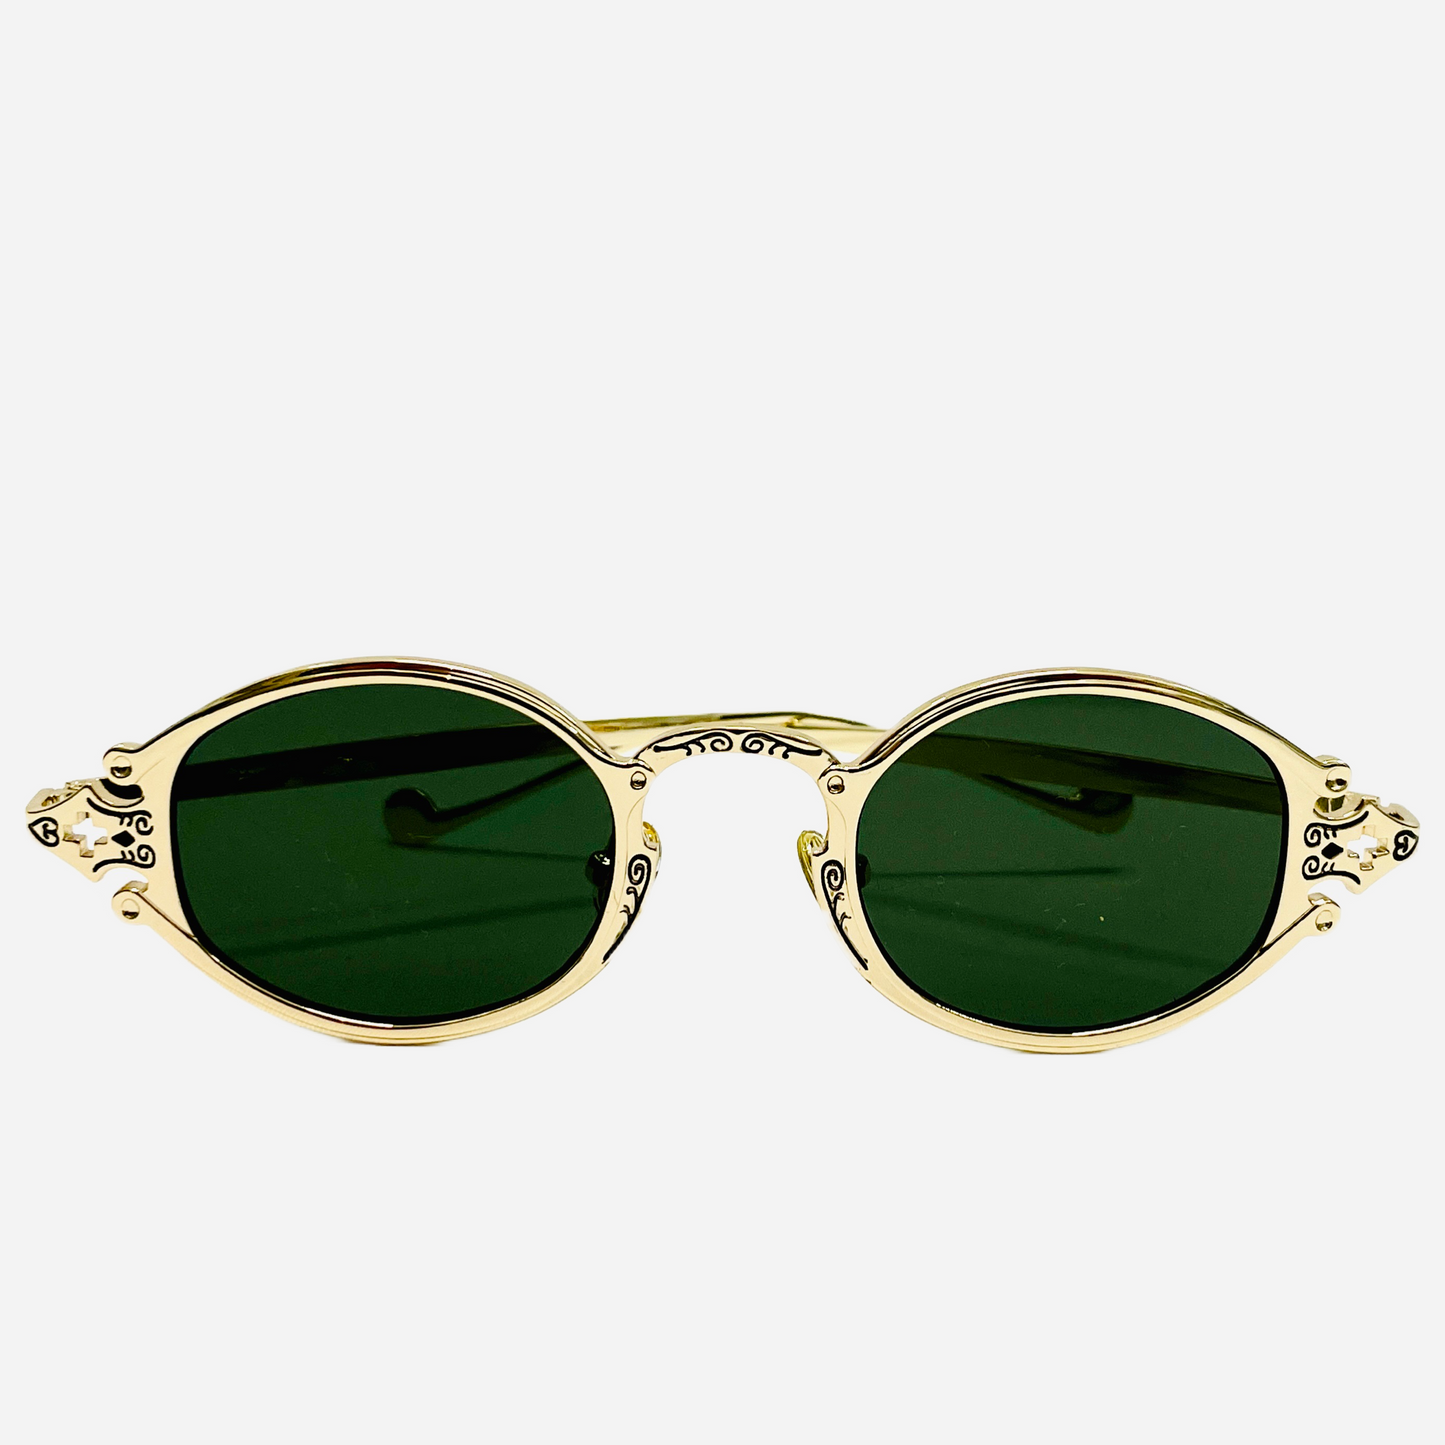 Vintage-Jean-Paul-Gaultier-Sonnenbrille-Sunglasses-Model-56-0001-gold-front-green-lense